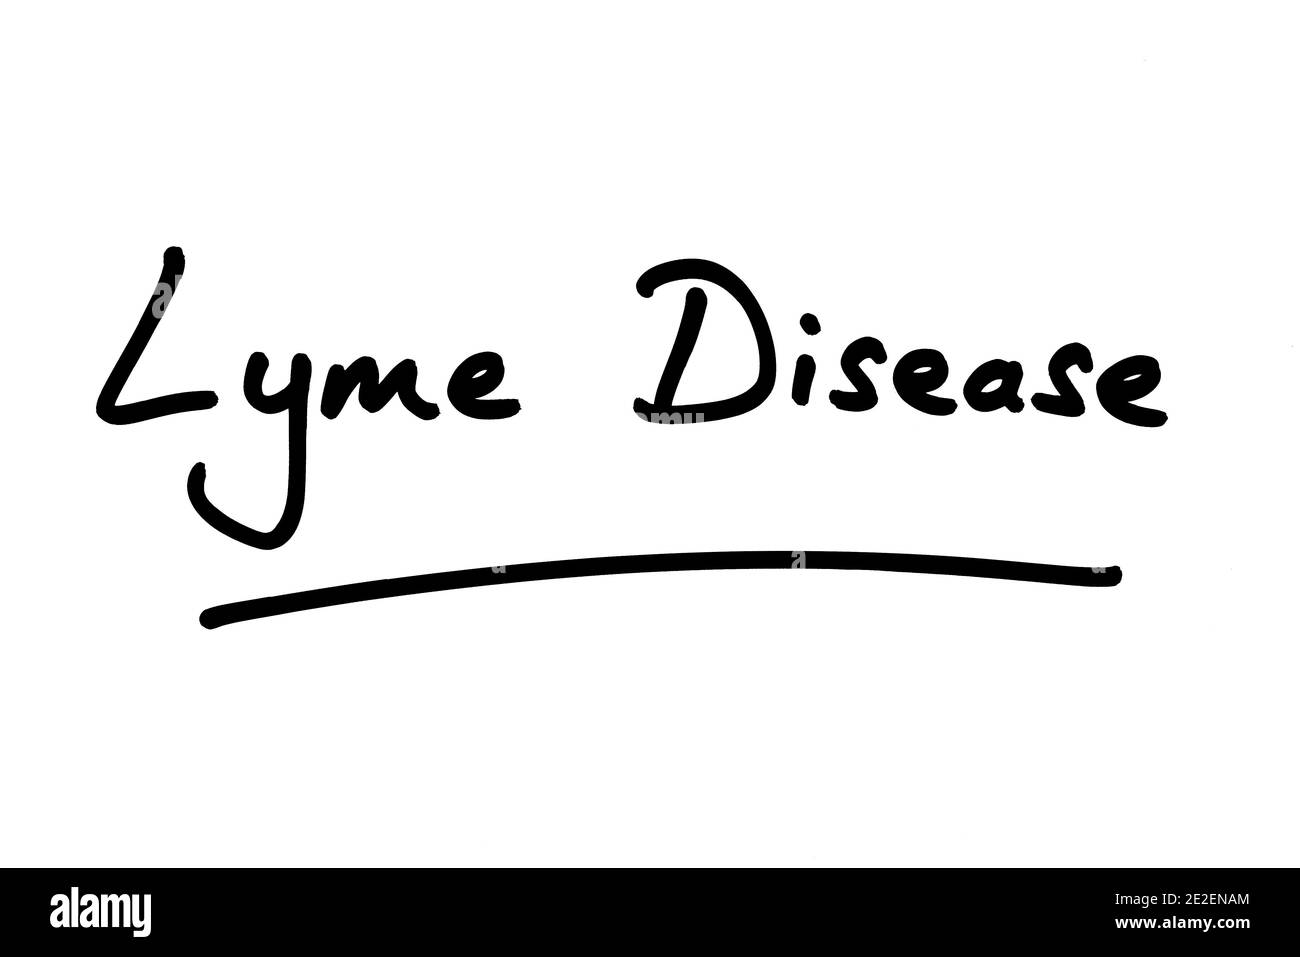 Lyme Disease, handwritten on a white background. Stock Photo